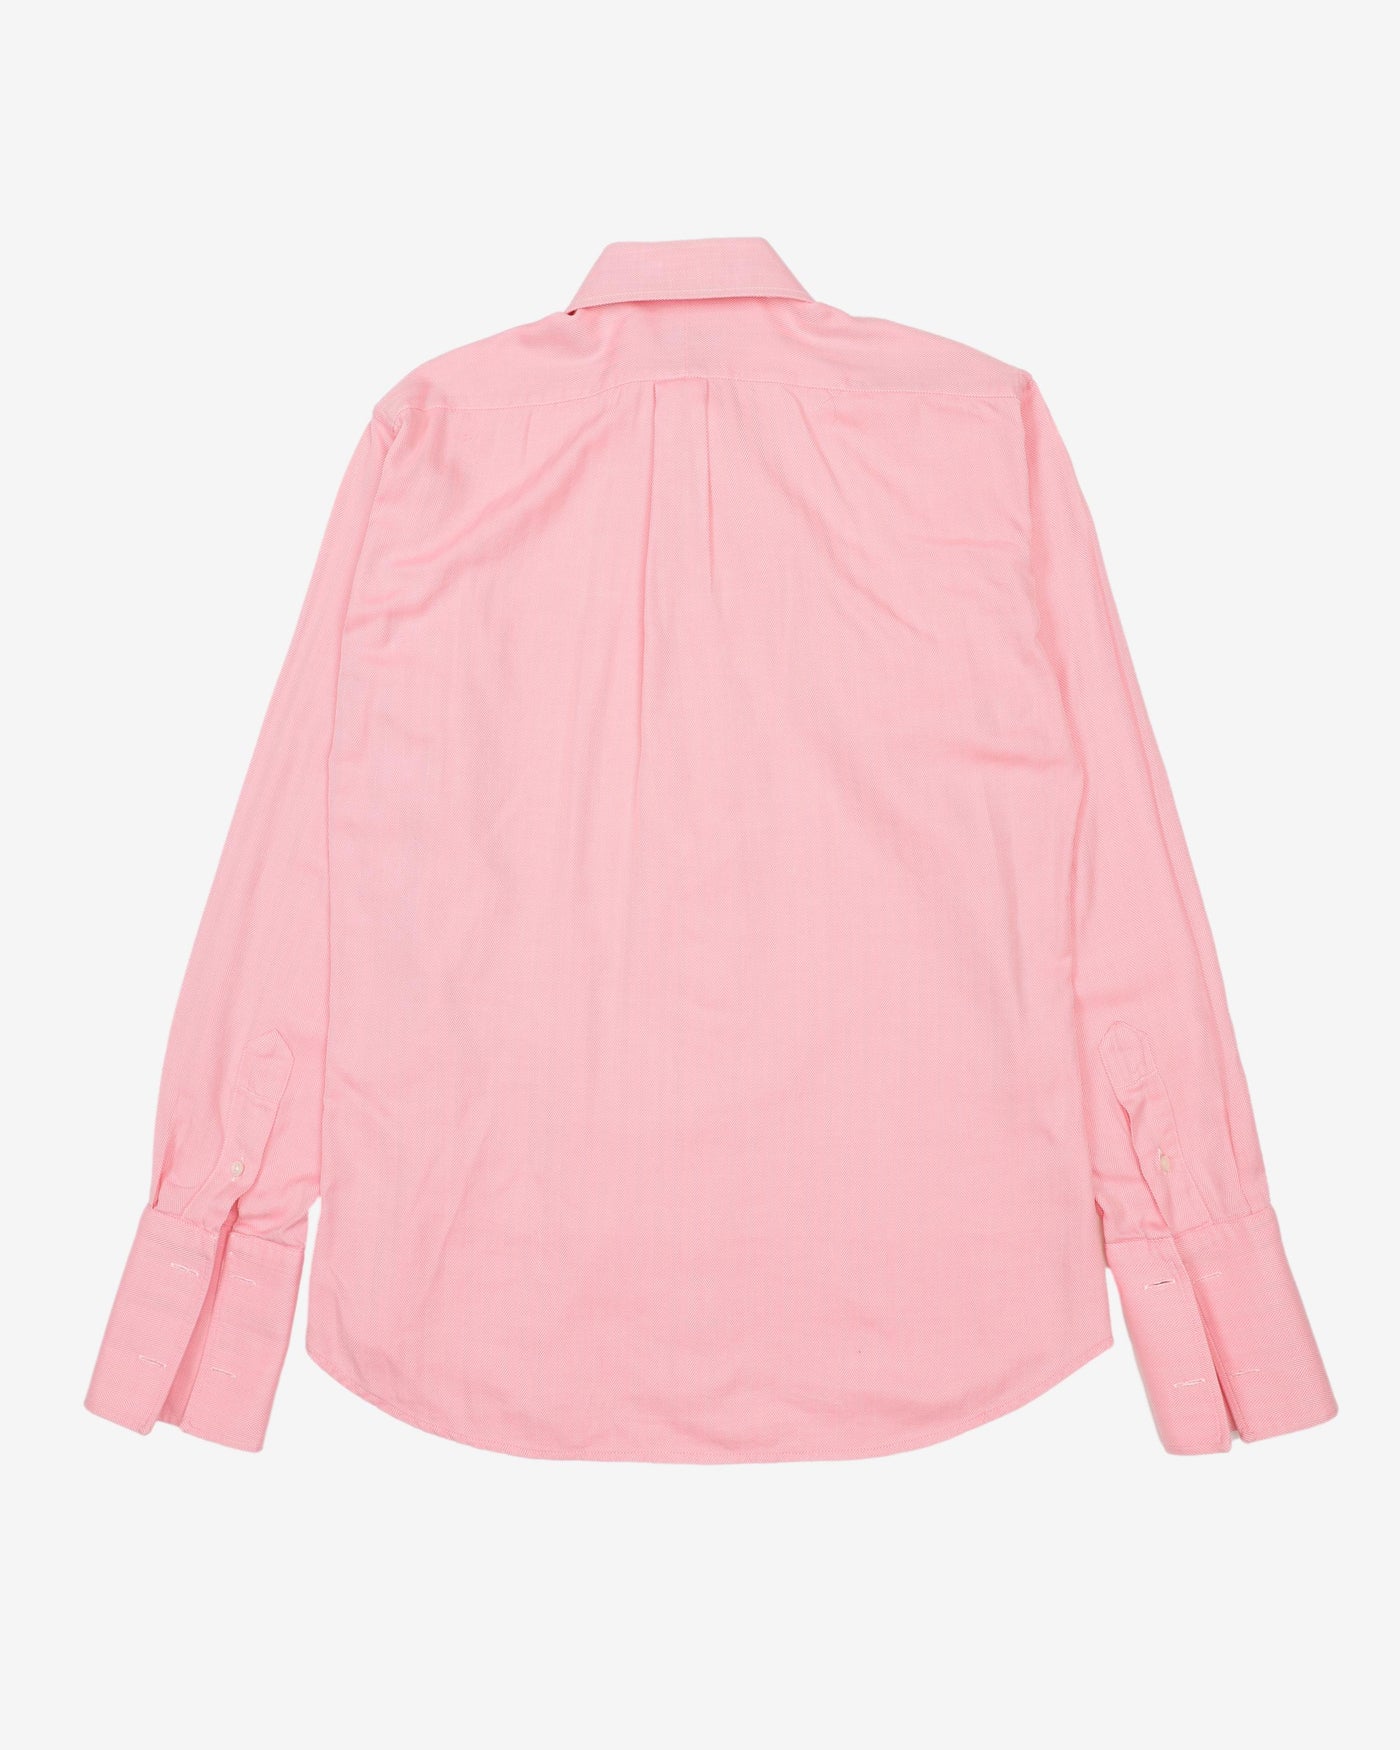 Burberry Pink Formal Long Sleeve Button Up Shirt  - L